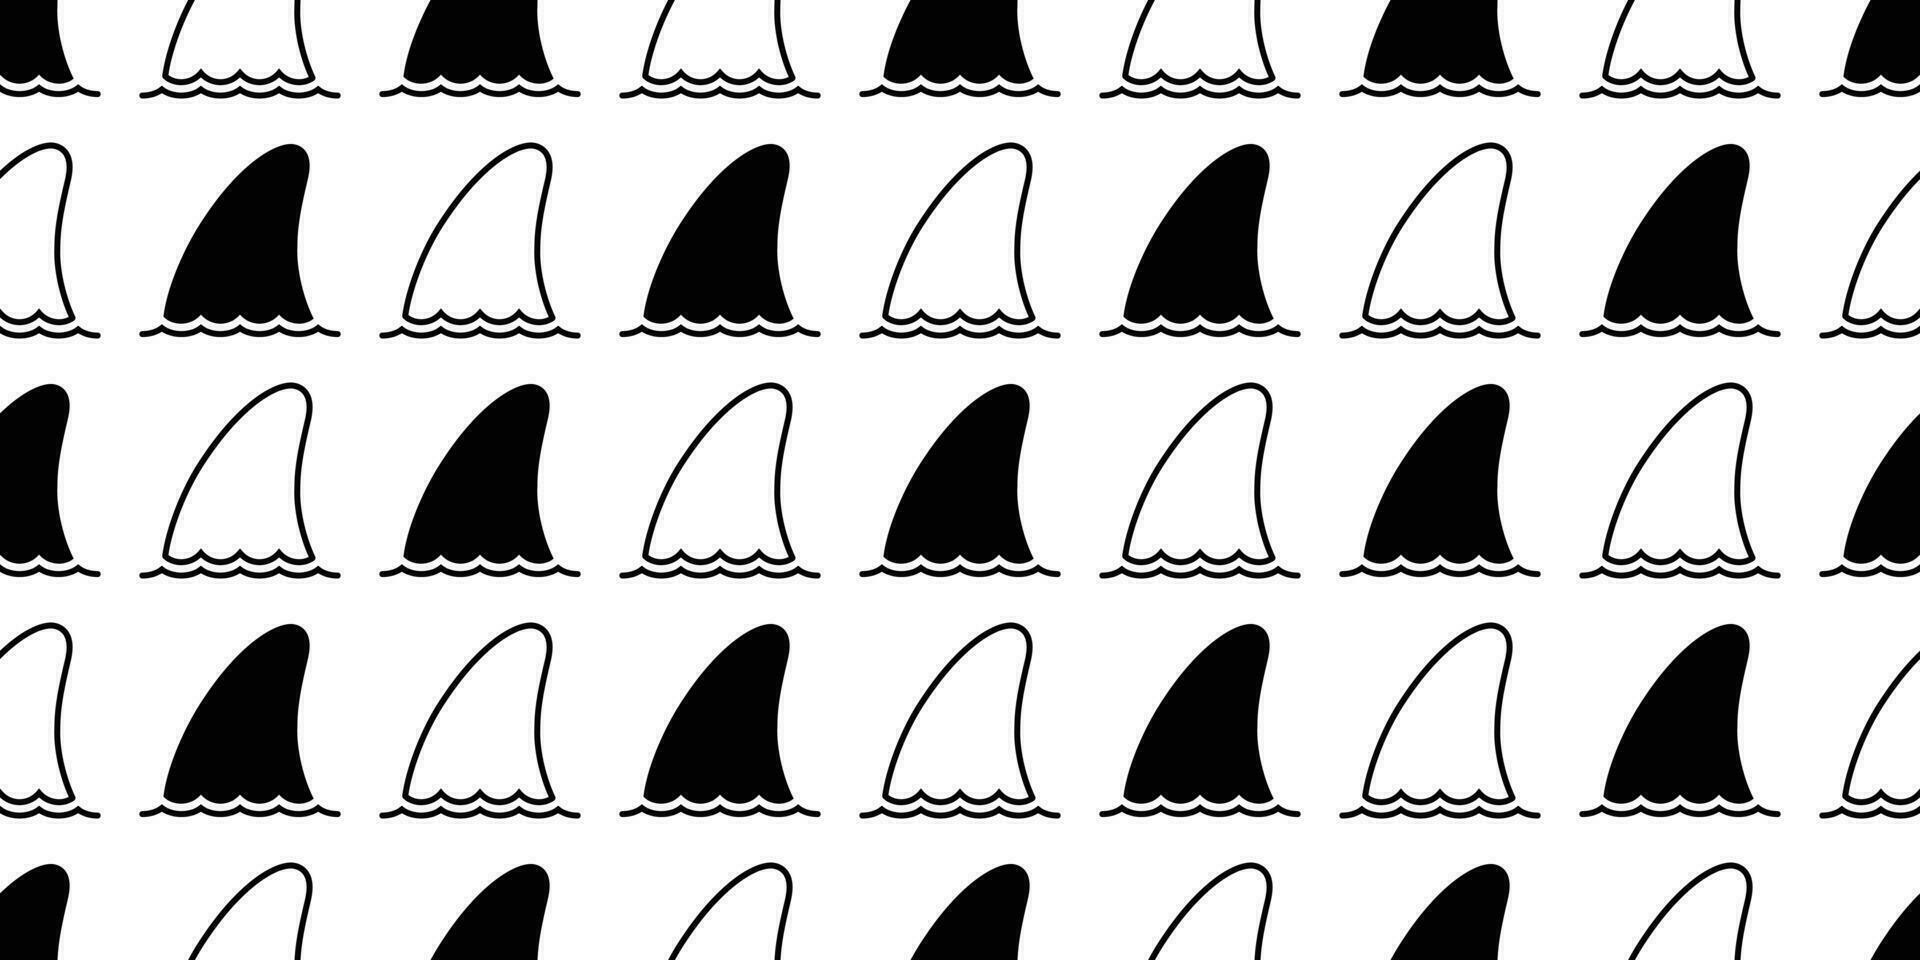 tiburón aleta sin costura modelo vector delfín pescado ballena bufanda aislado repetir fondo de pantalla loseta antecedentes animal dibujos animados ilustración Oceano mar diseño